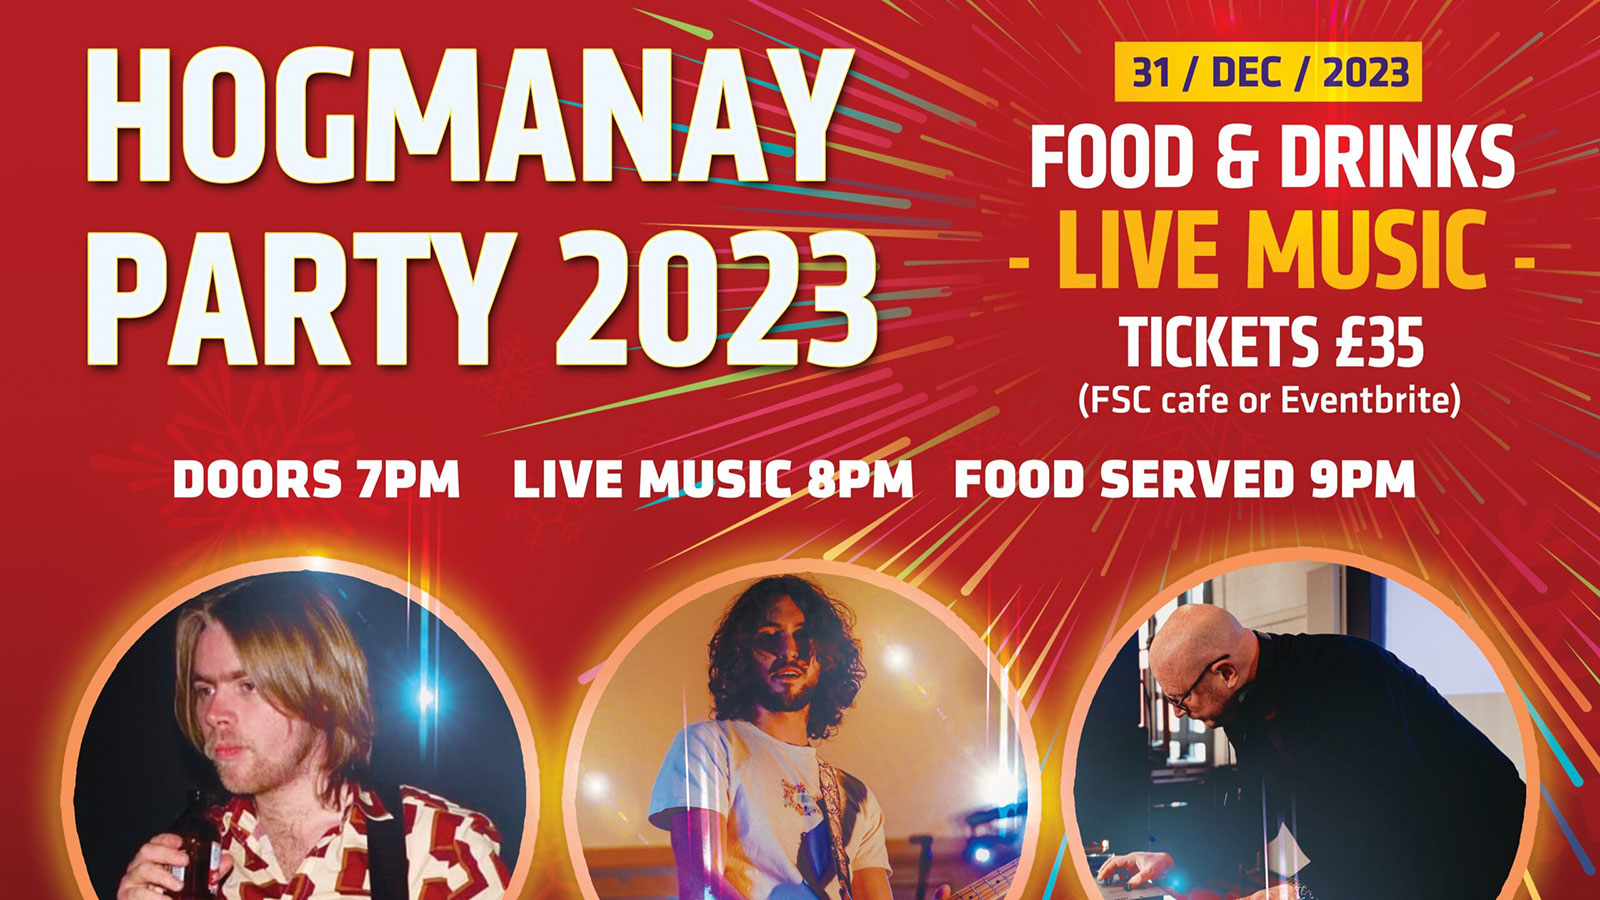 Hogmanay Party 2023